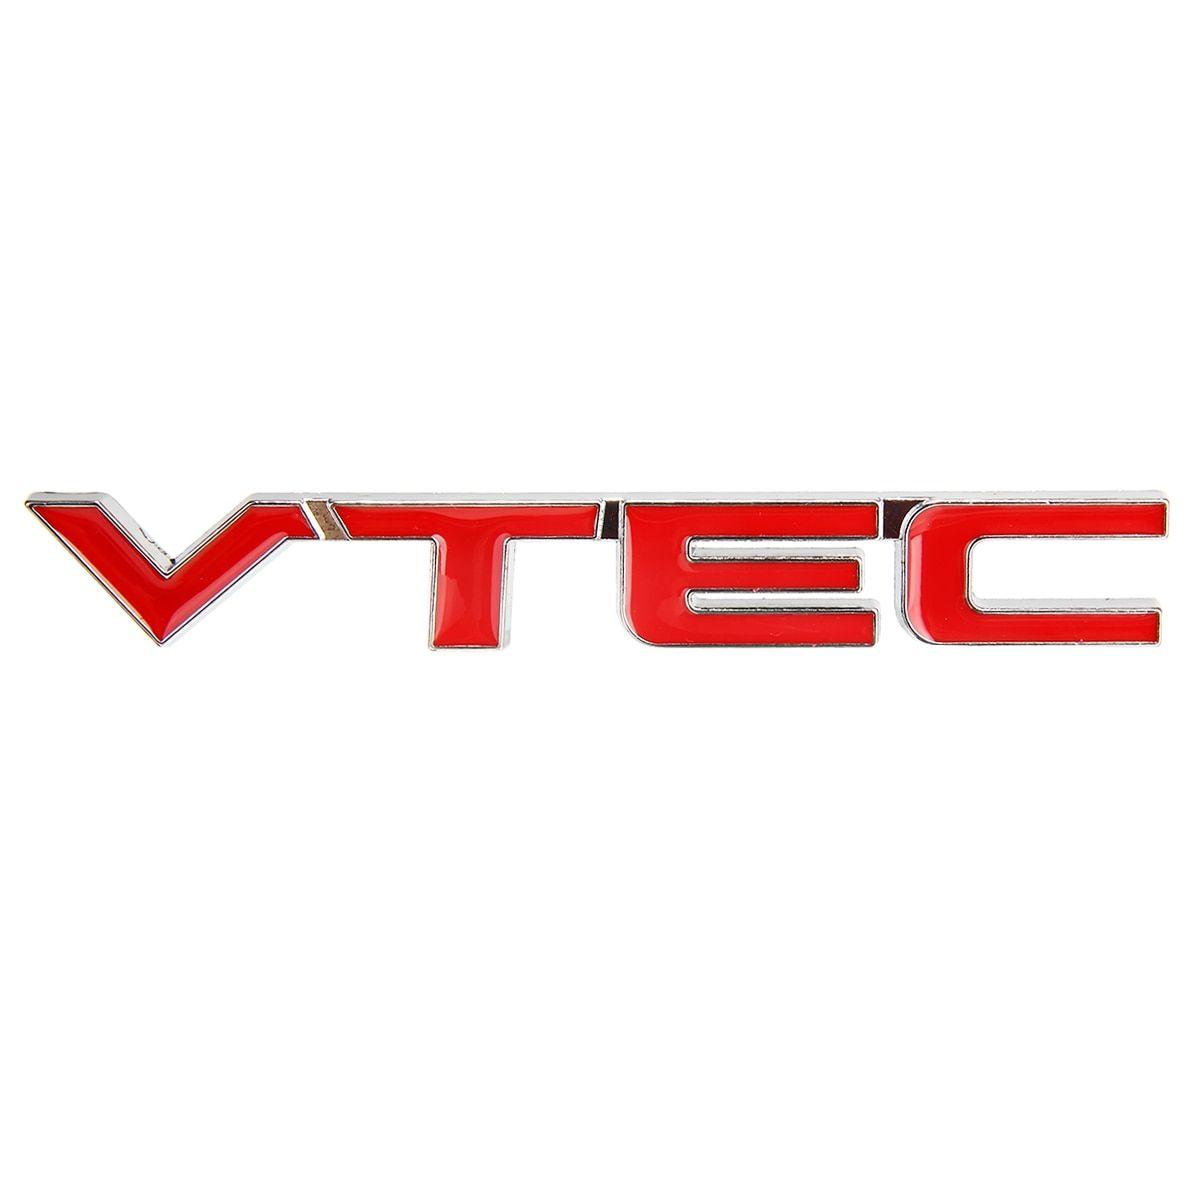 Vtec Logo - MAYITR High Quality Metal VTEC Logo Emblem Car Body Badge Sticker Decal for  Honda Civic Accord Odyssey Spirior CRV Red + Silver